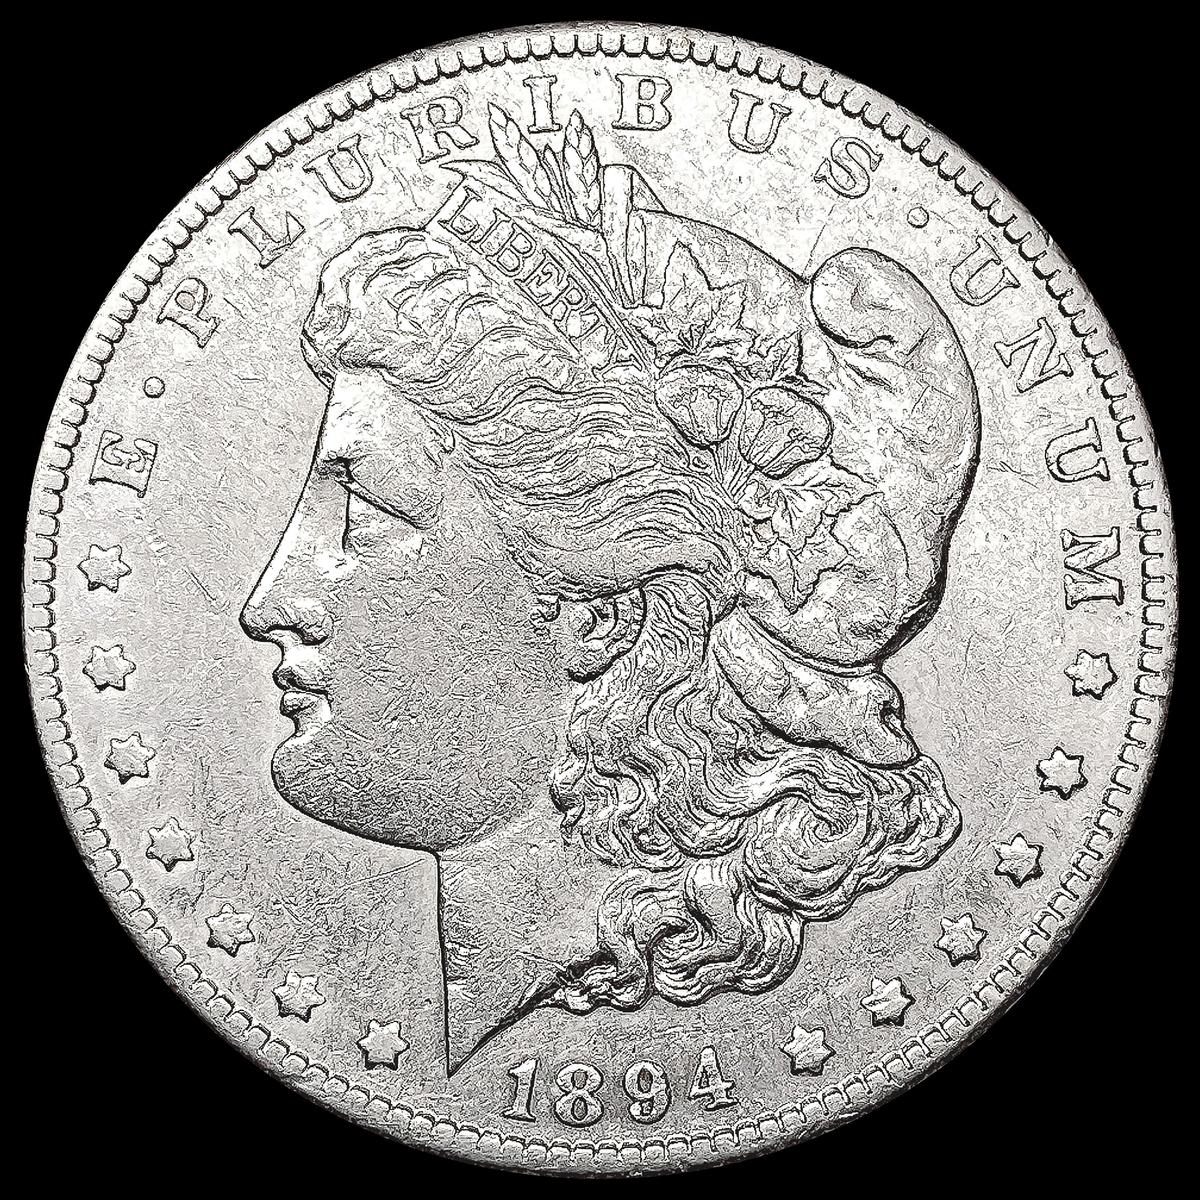 1894-S Morgan Silver Dollar CLOSELY UNCIRCULATED